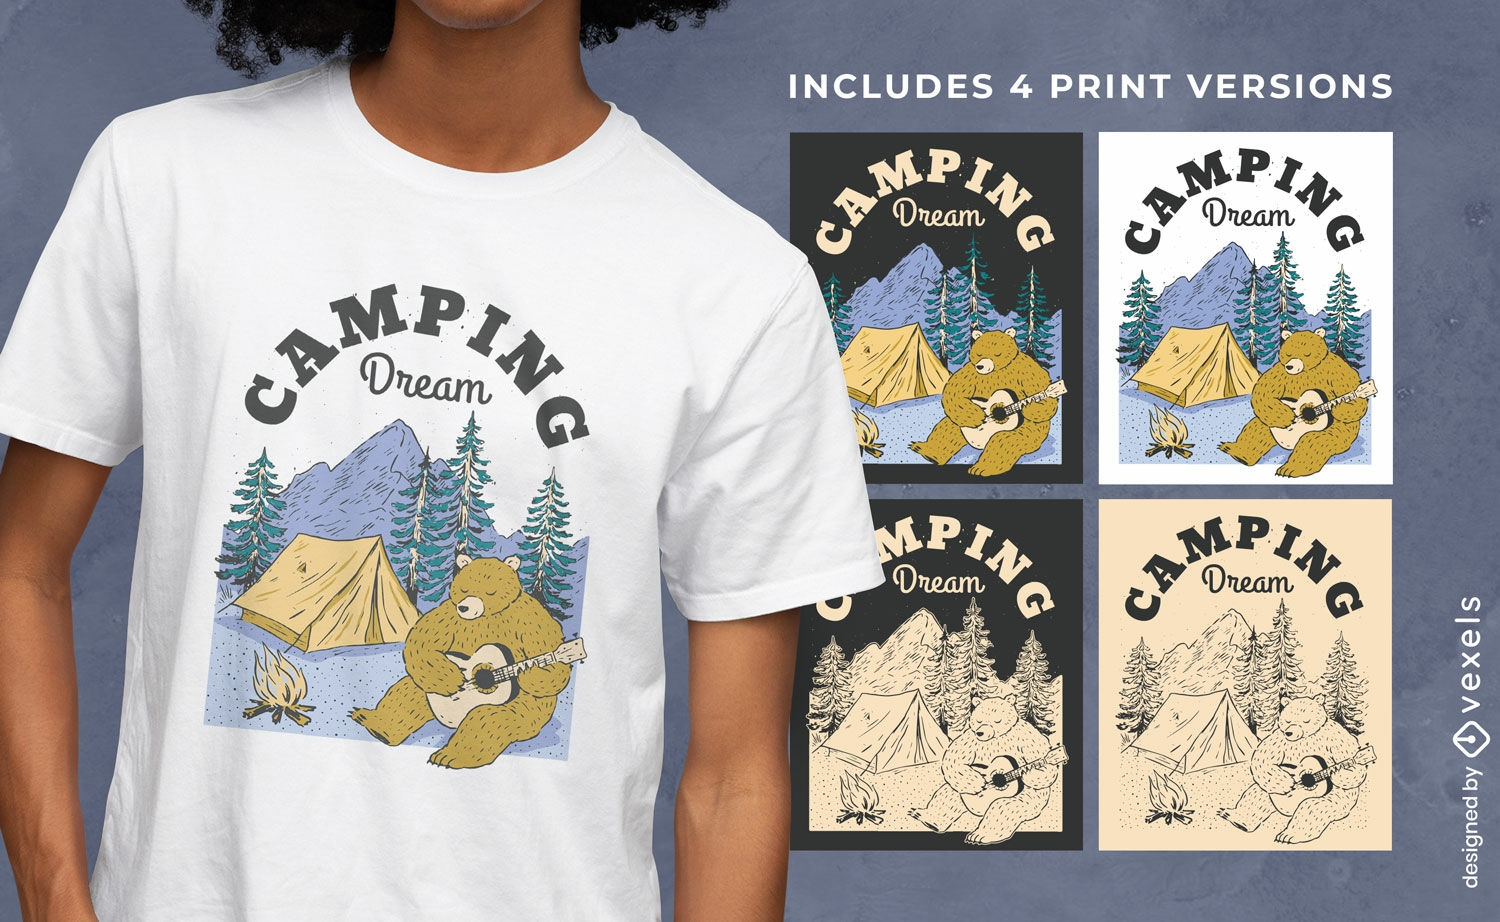 Bear camping camiseta dise?o m?ltiples versiones